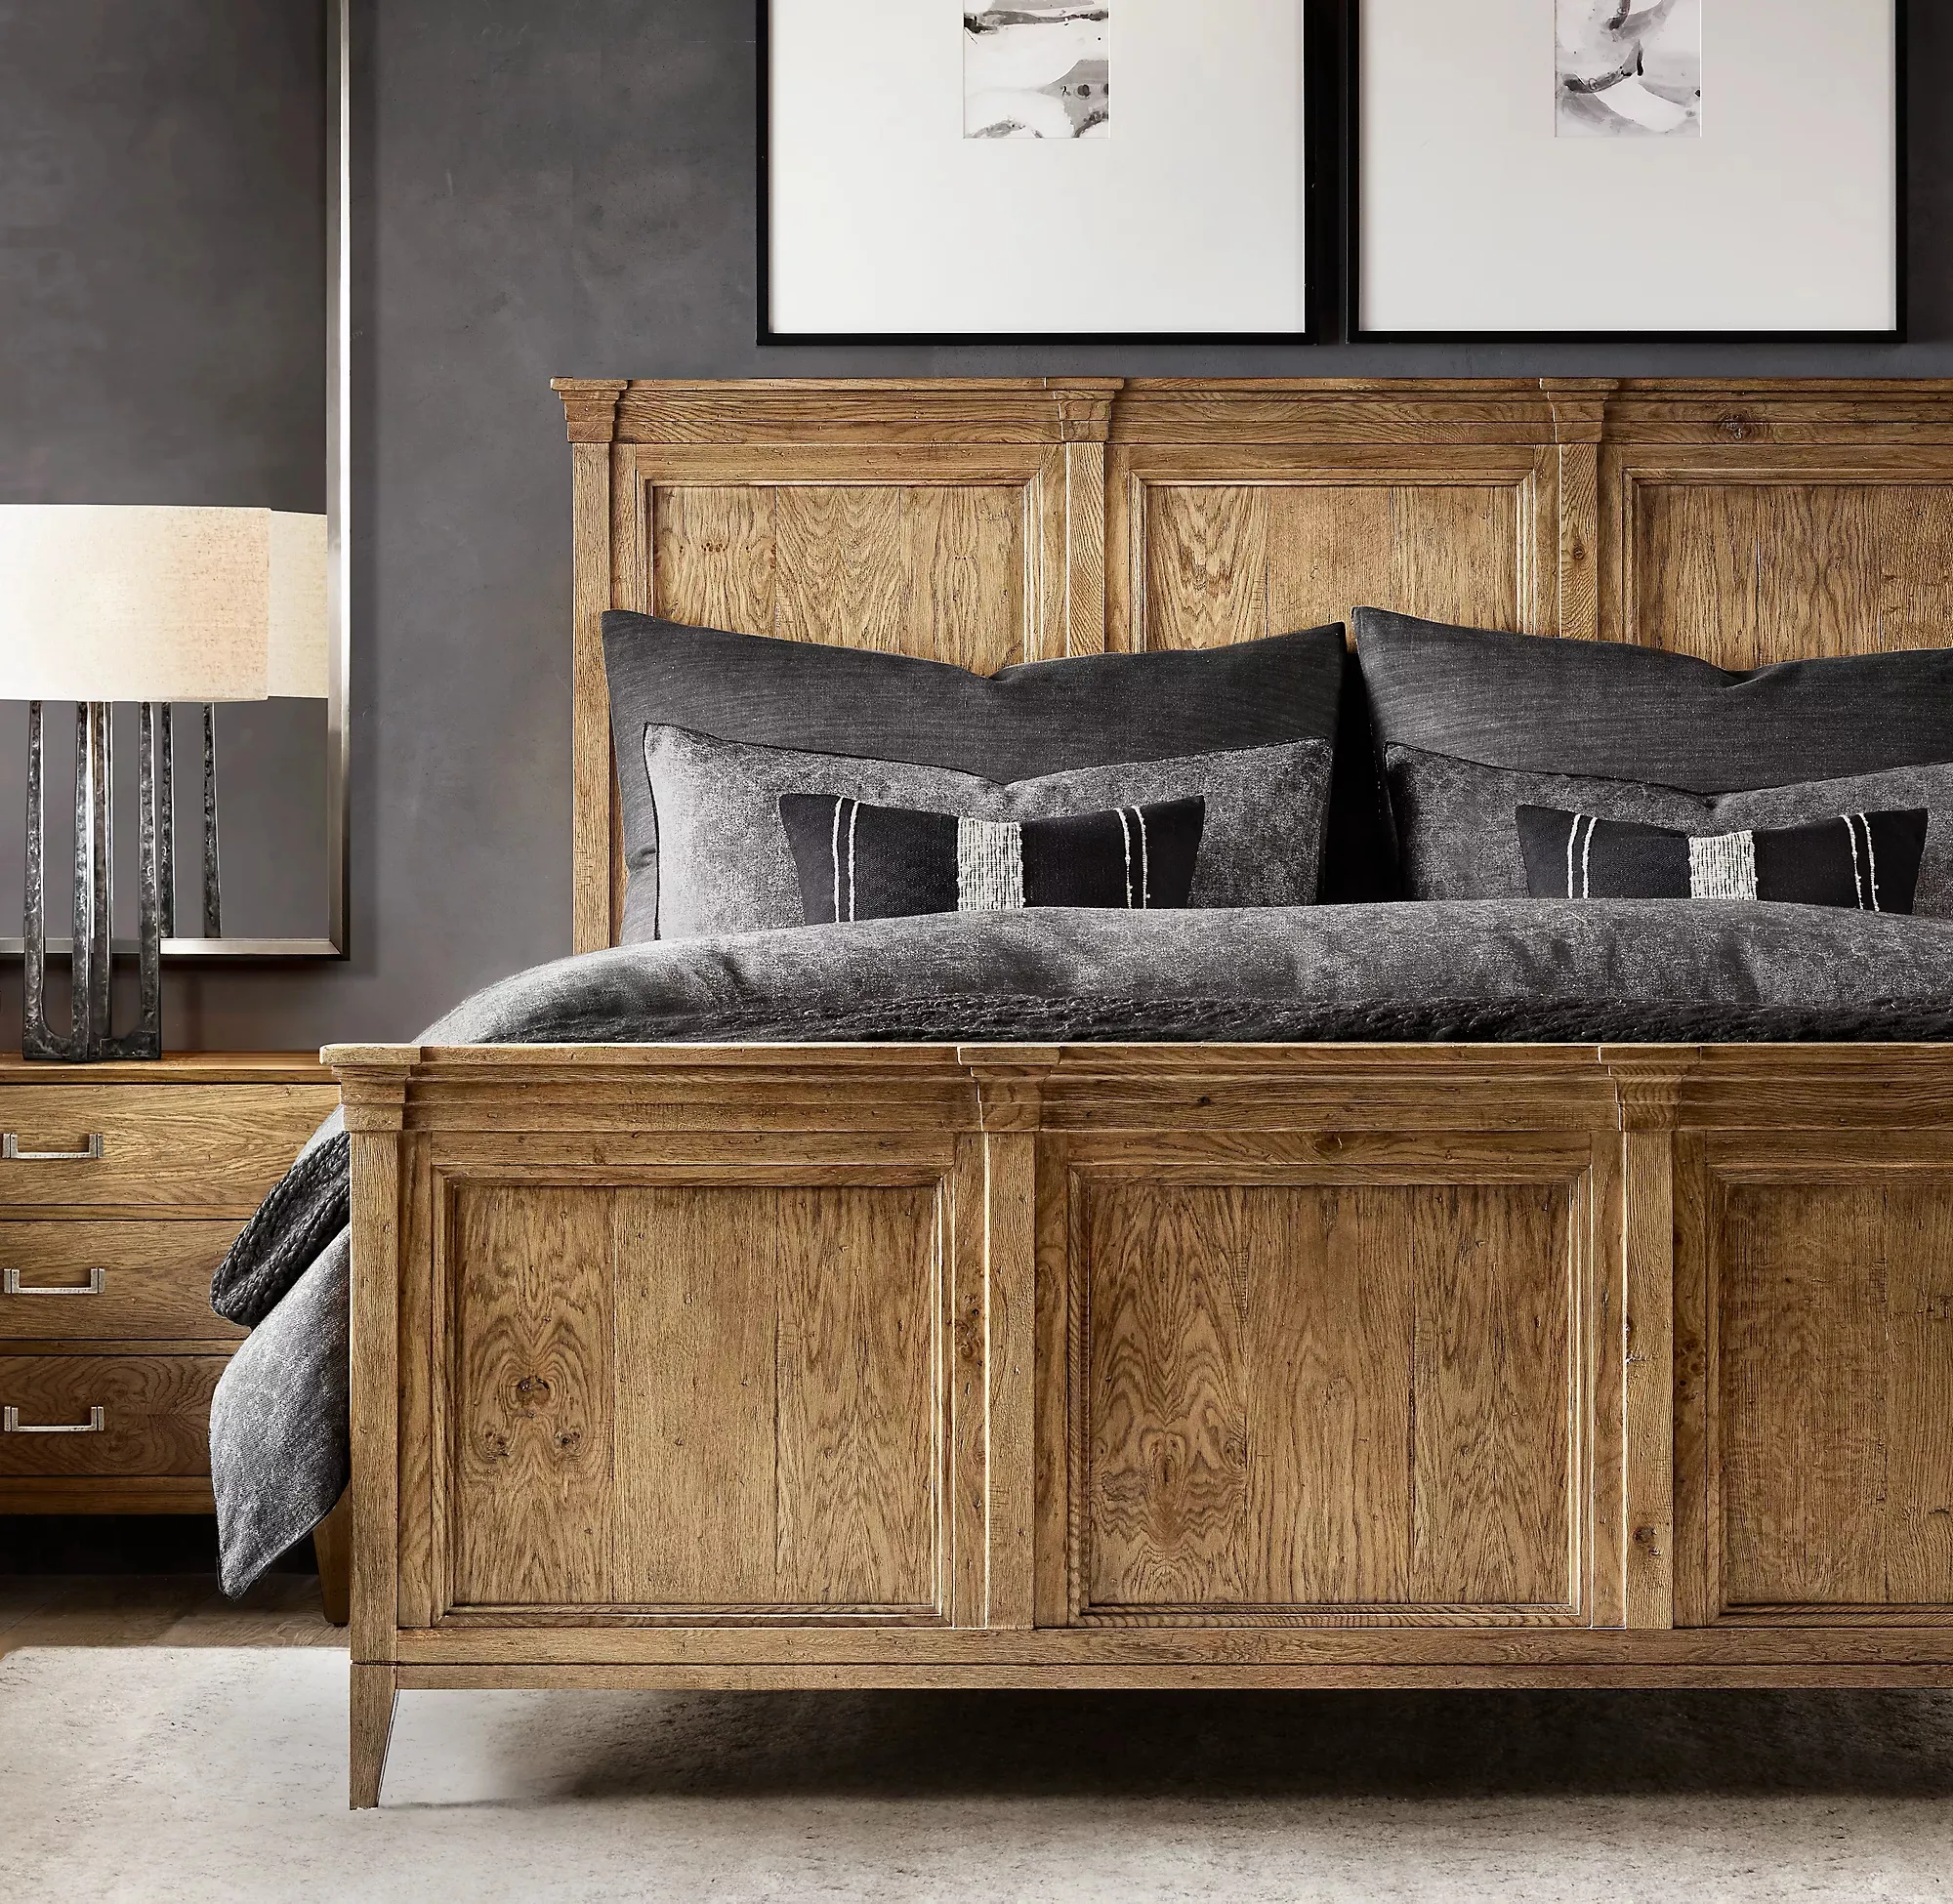 Estilo americano design escultura rural, madeira maciça cama de casal lounge villa hotel apartamento personalizado mobília do quarto